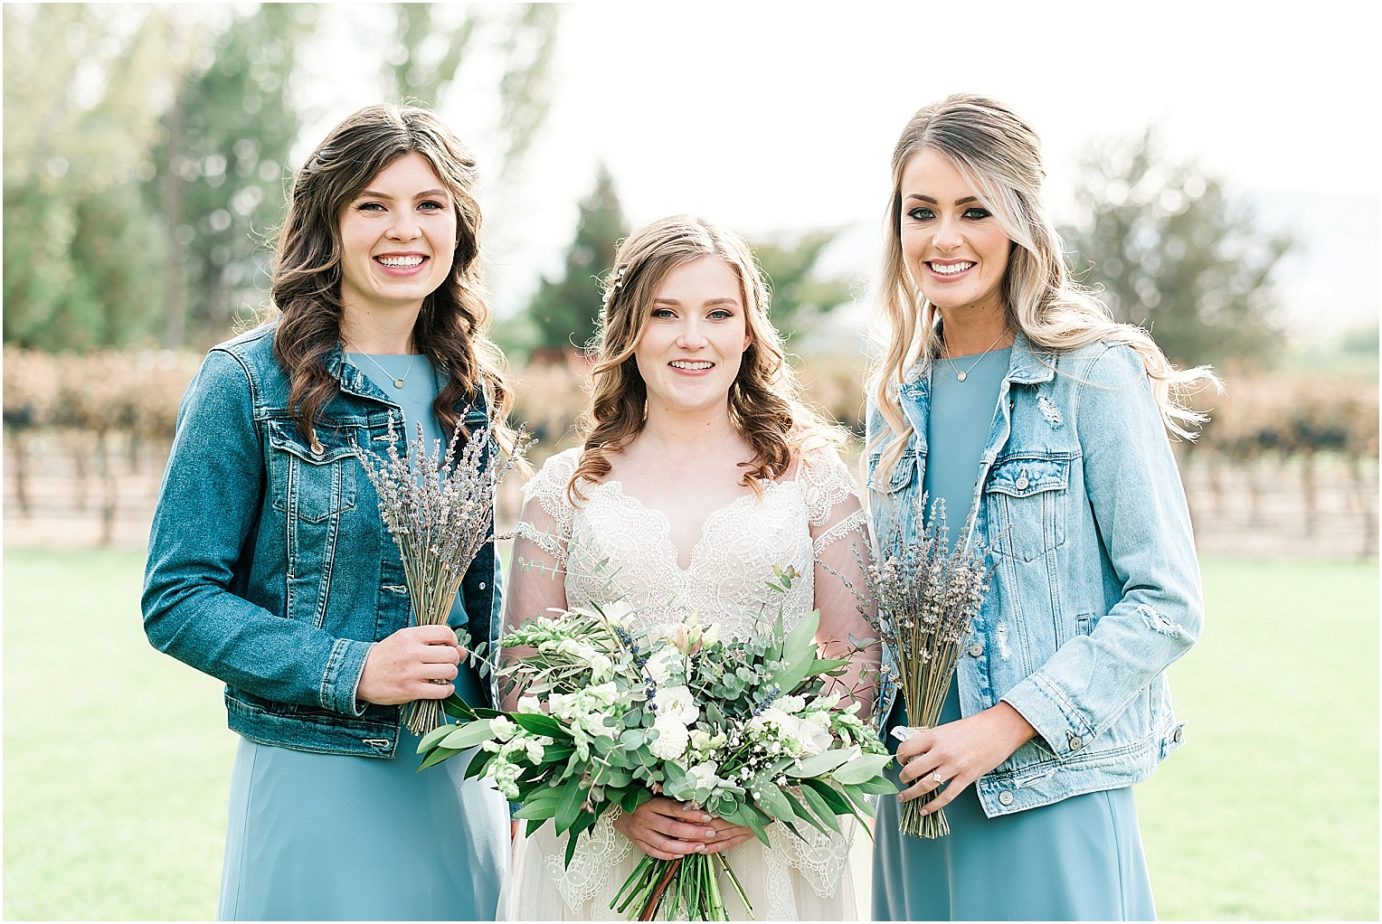 Sugar pine barn wedding tucannon cellars Brandon and Chloe bridal party in dusty blue dresses